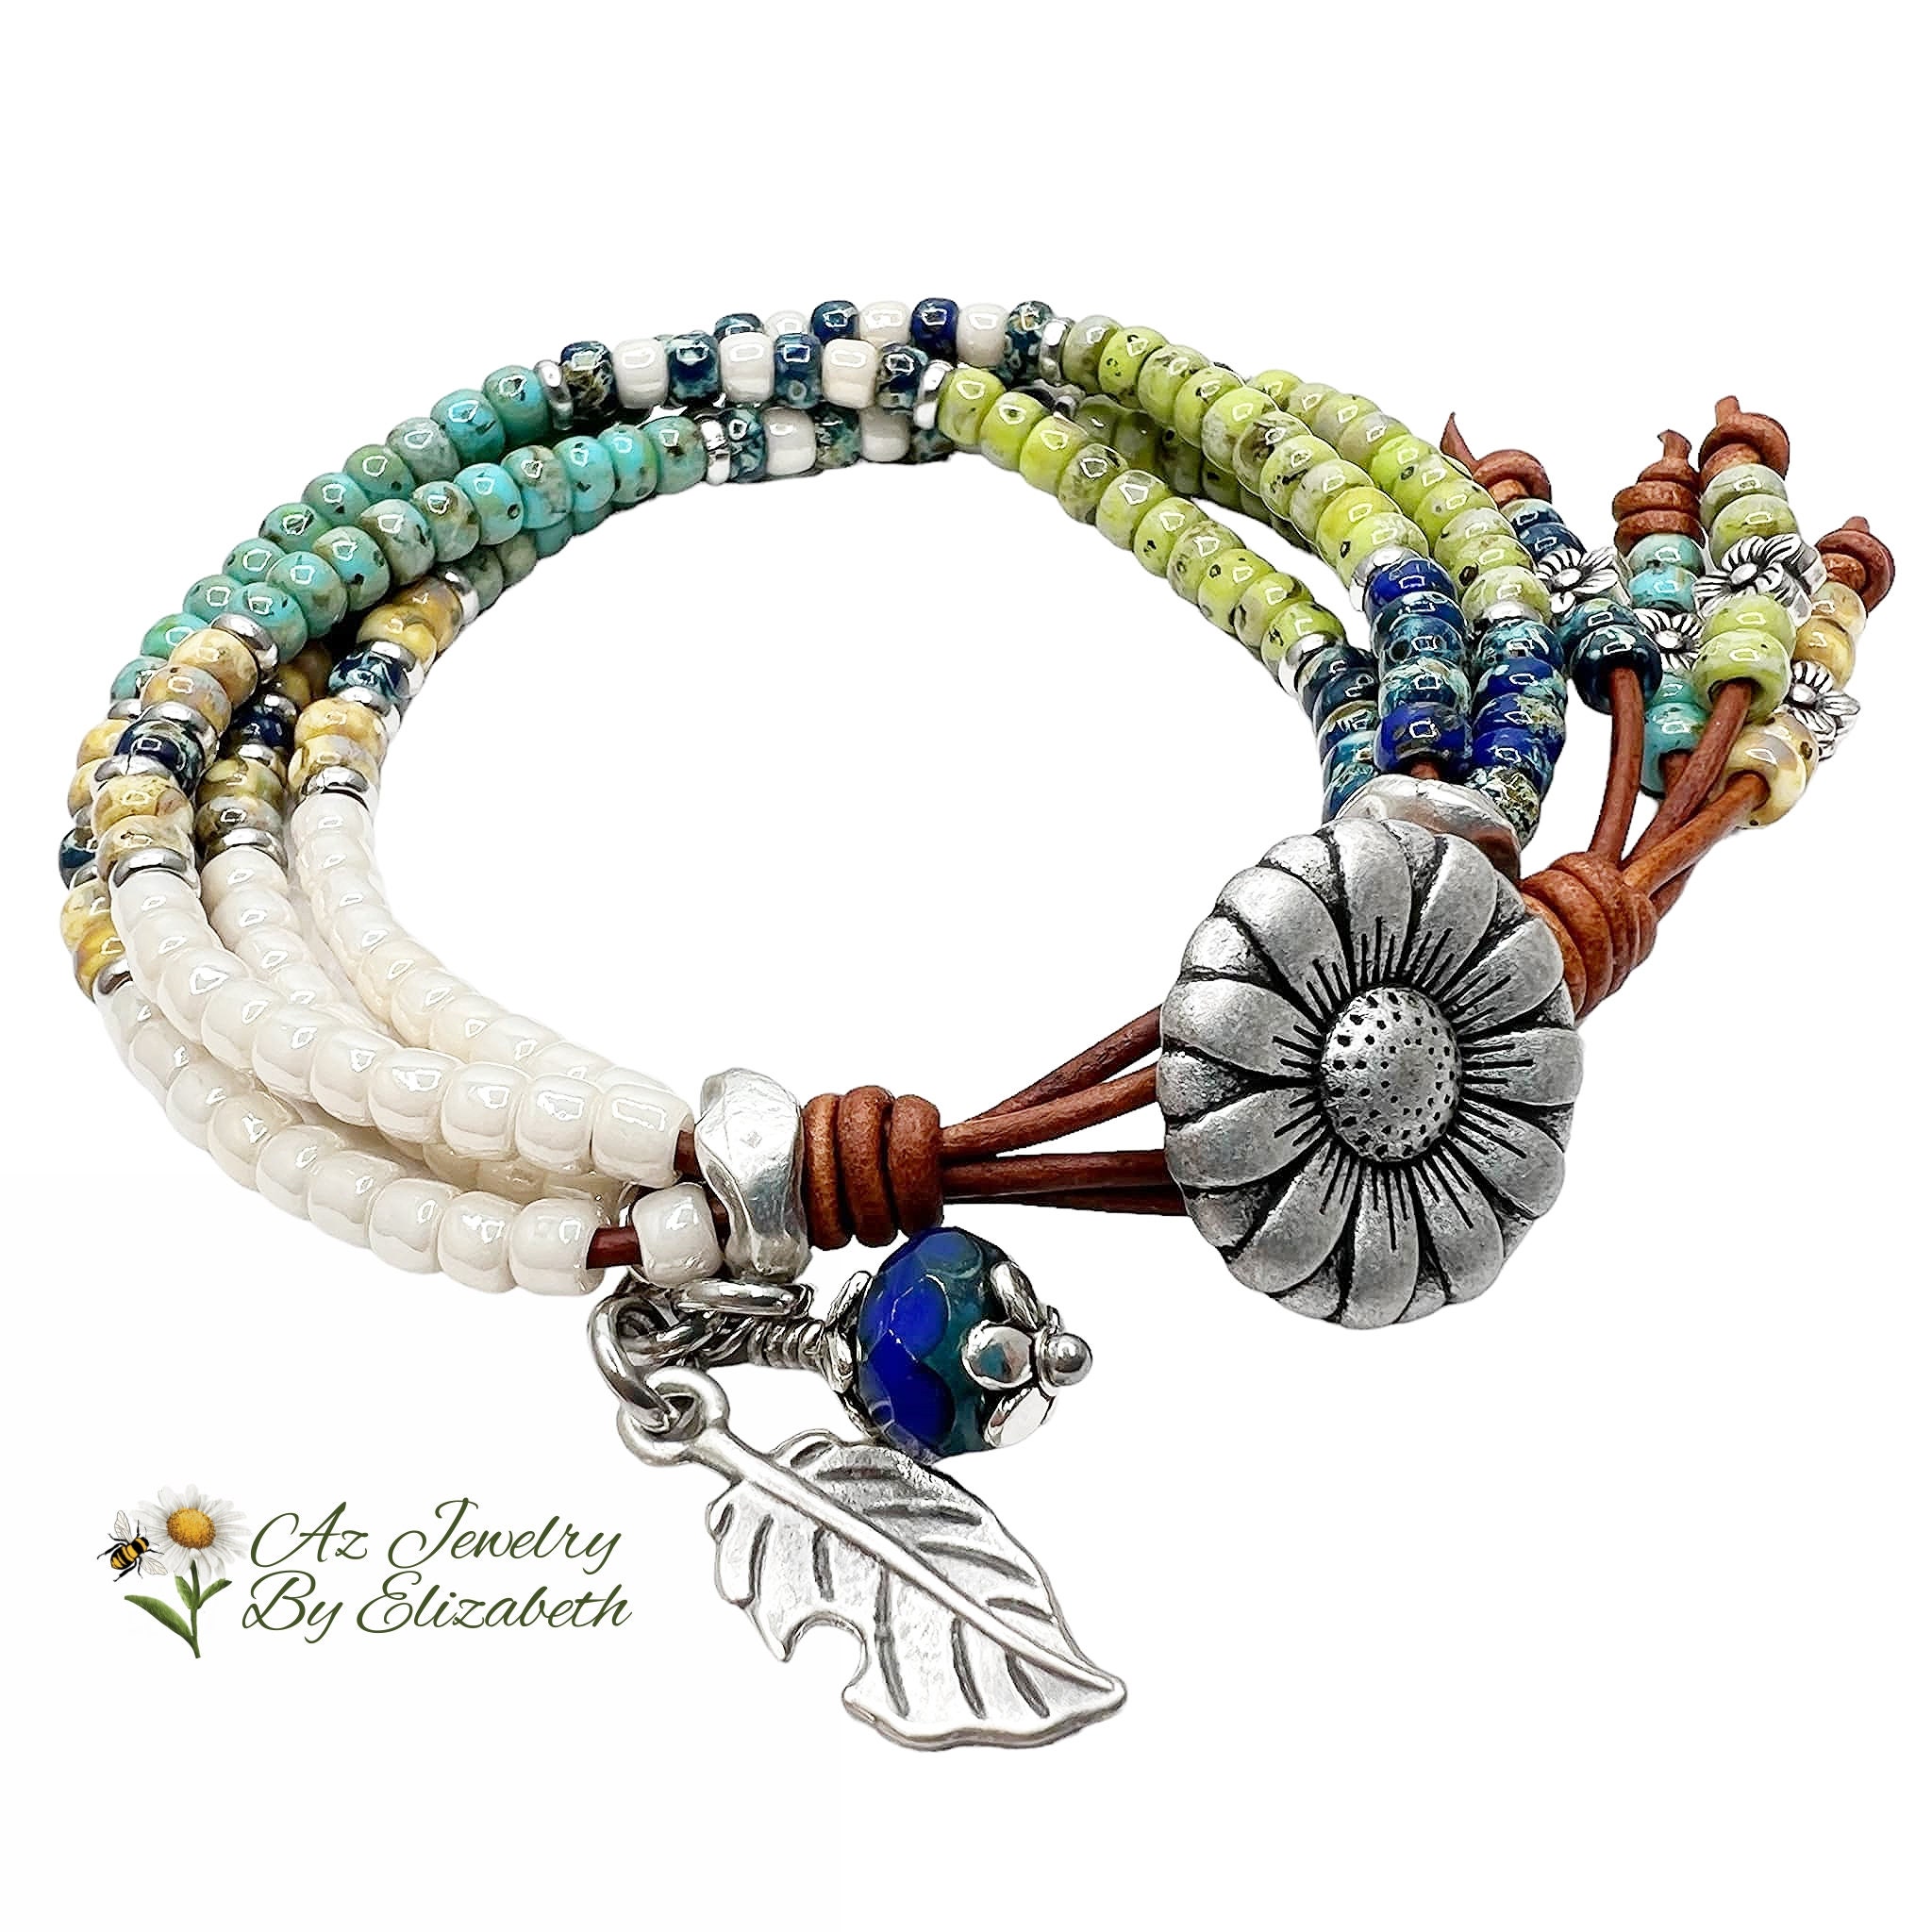 Bulk Daisy Flower Seed Bead Bracelet - Choose Your Favorite String Color! 10 Bracelets (-10%)